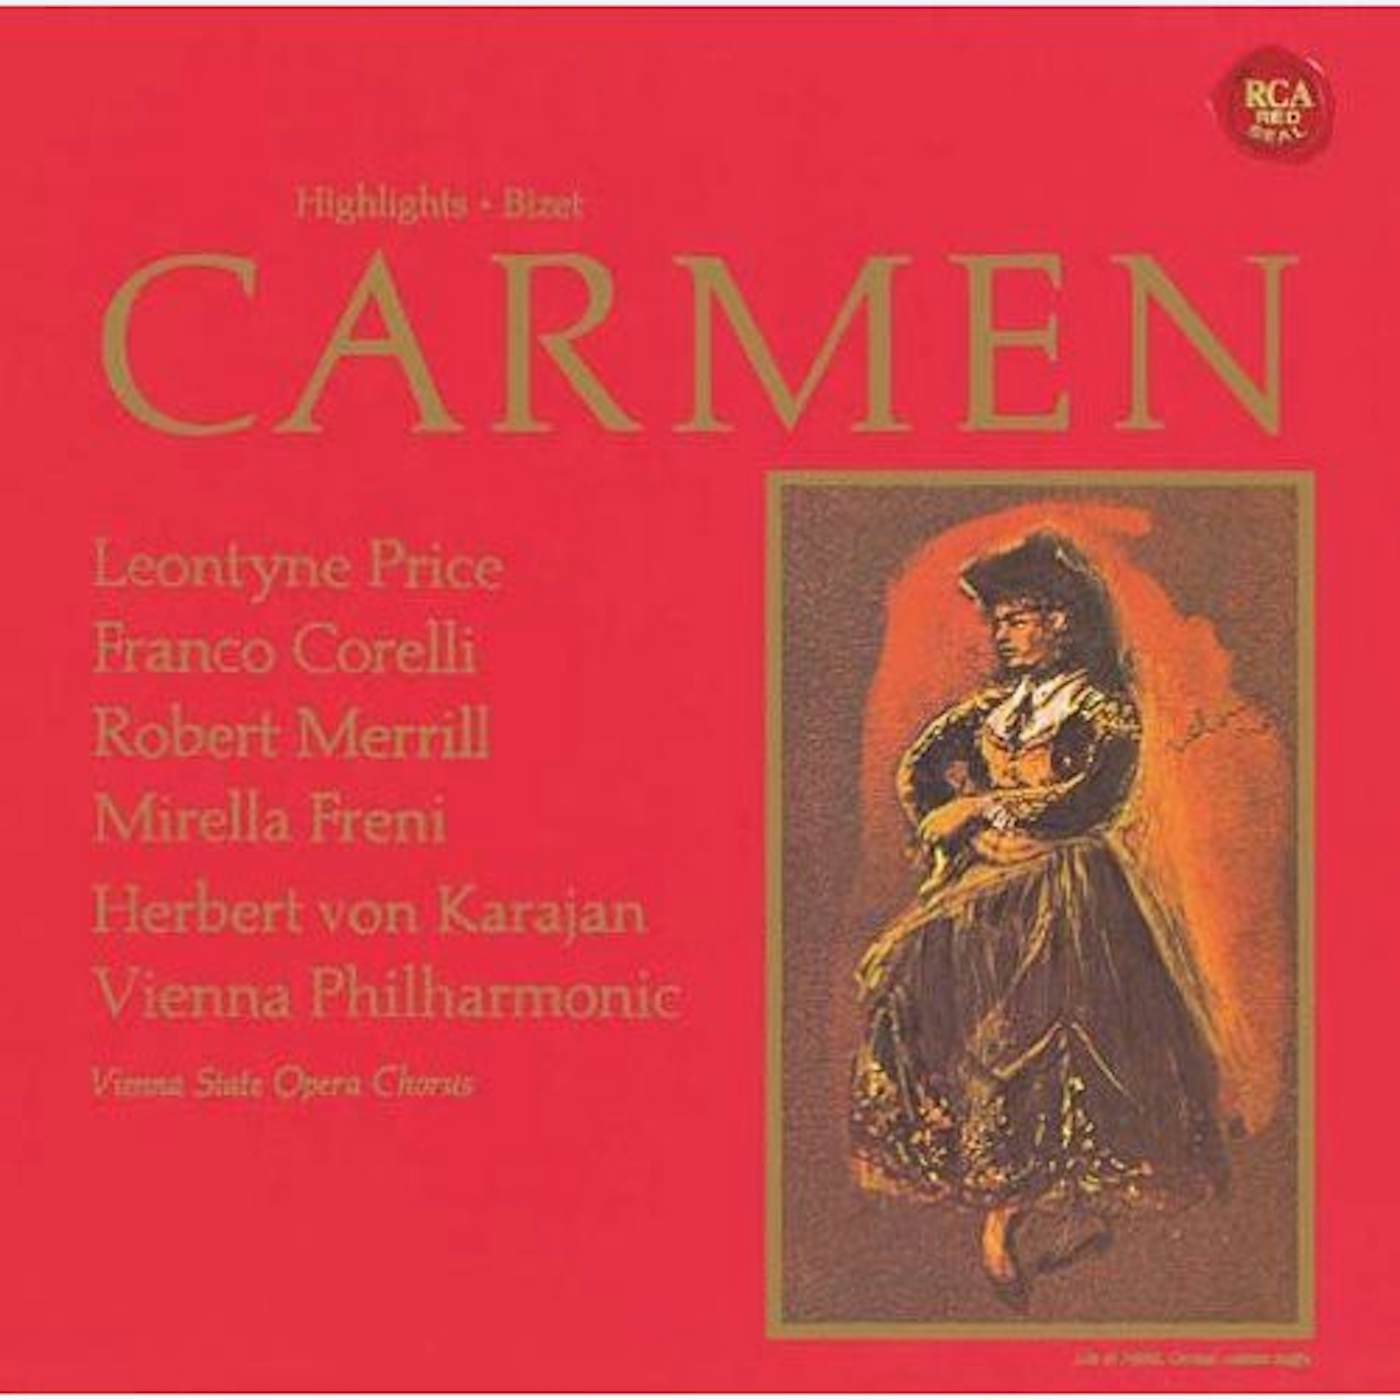 Herbert von Karajan BIZET: CARMEN (HIGHLIGHTS) CD